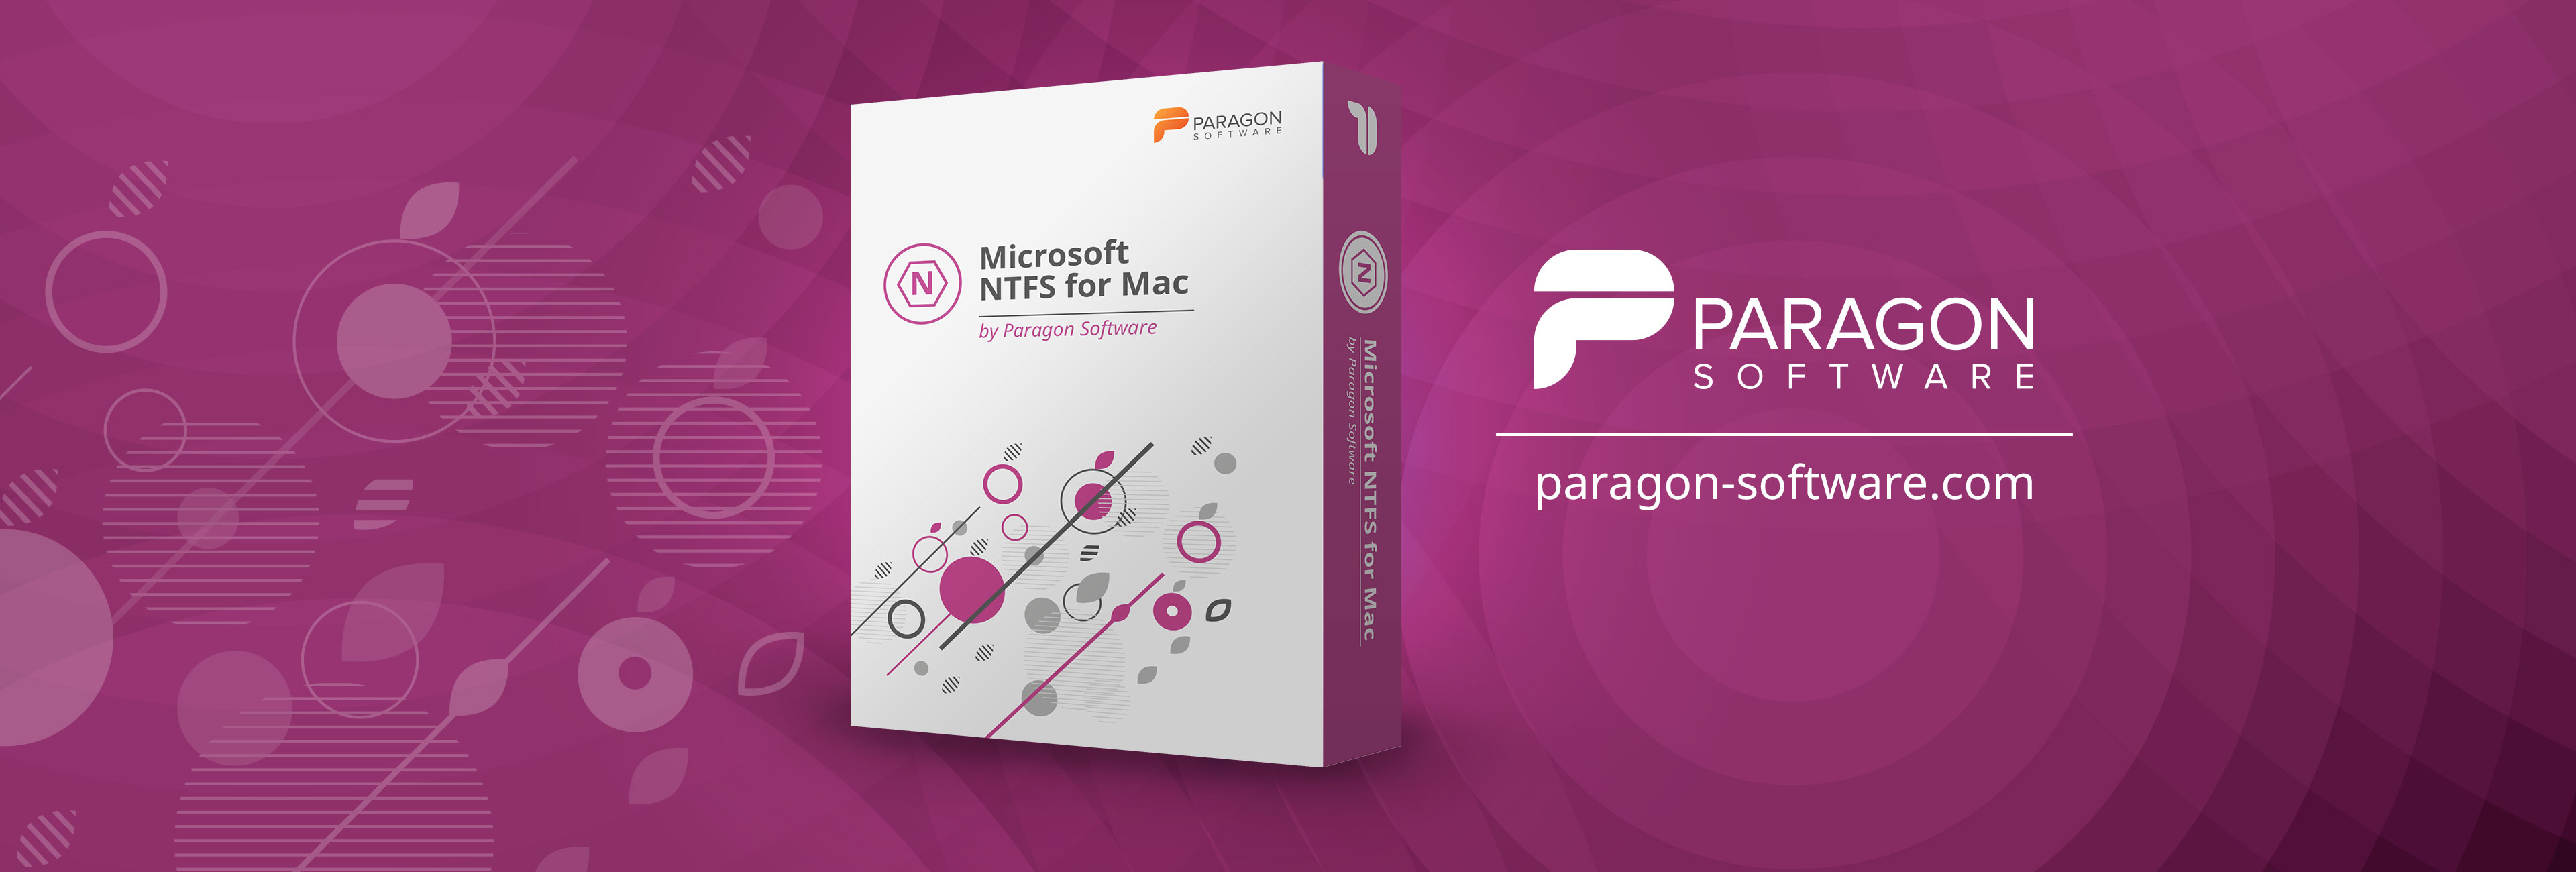 paragon ntfs for mac 14 vs 15